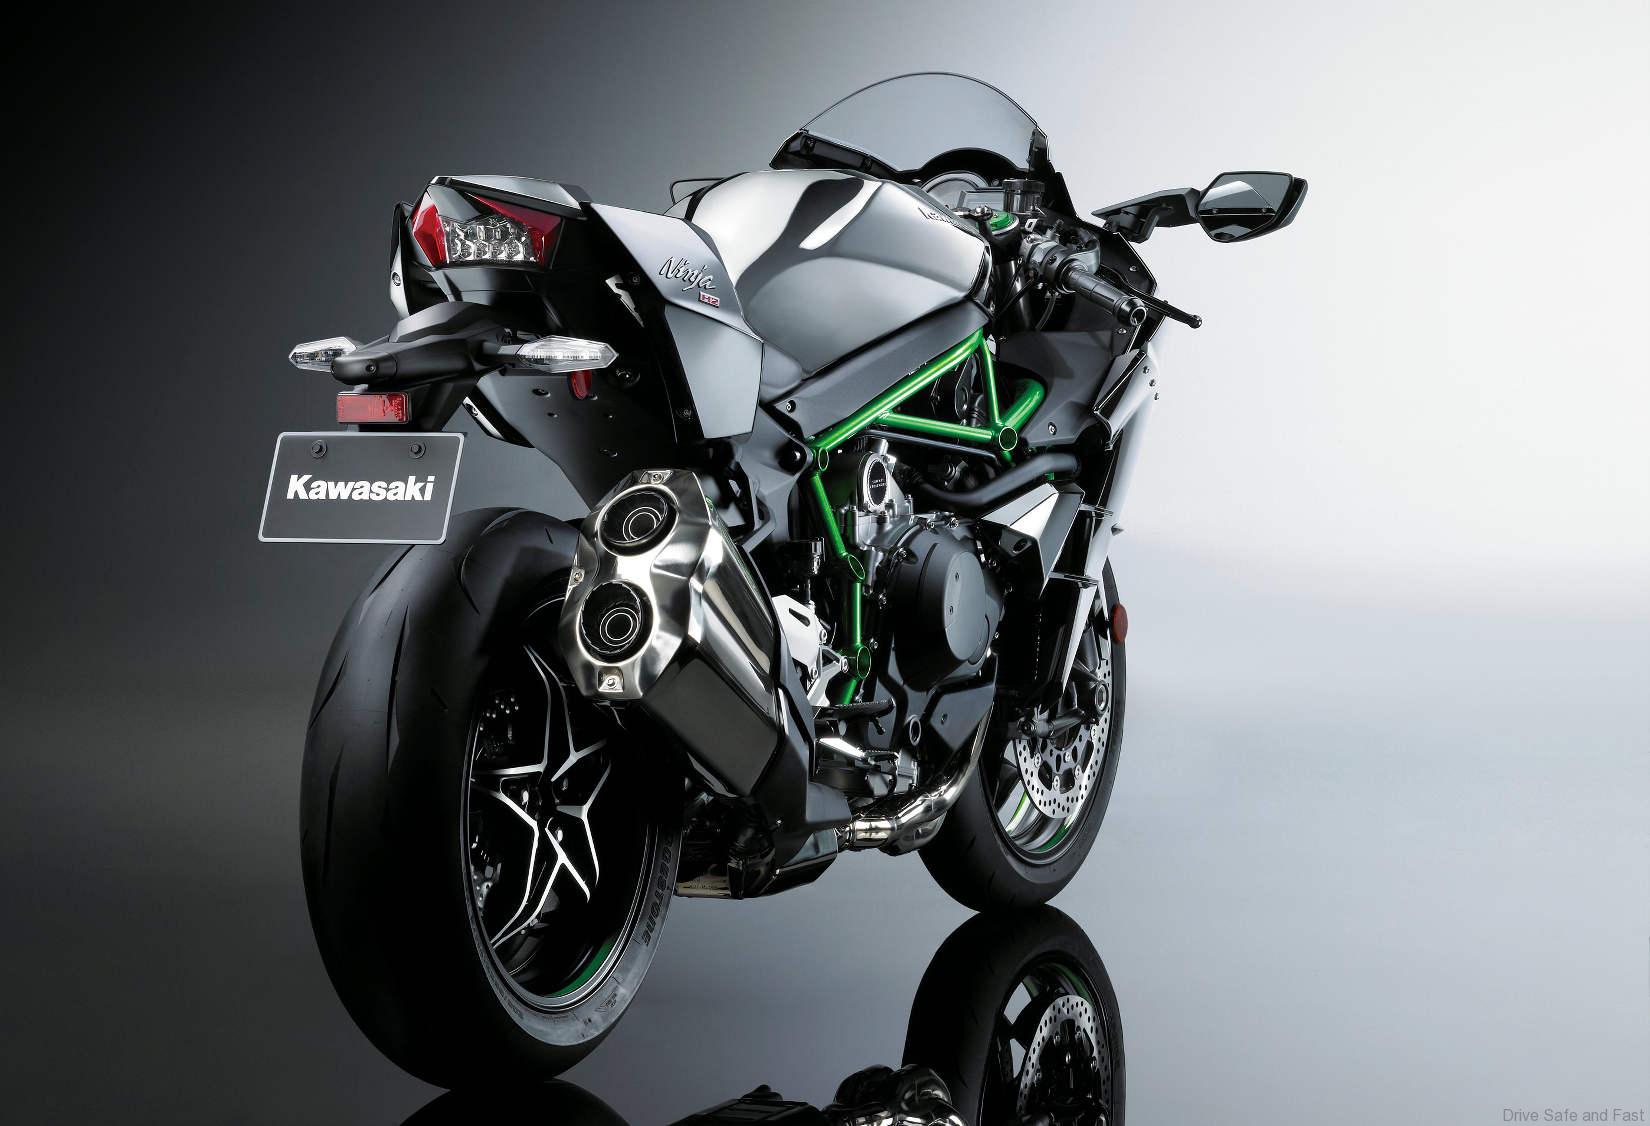 Kawasaki Reveals New Ninja H2 Series – Drive Safe and Fast